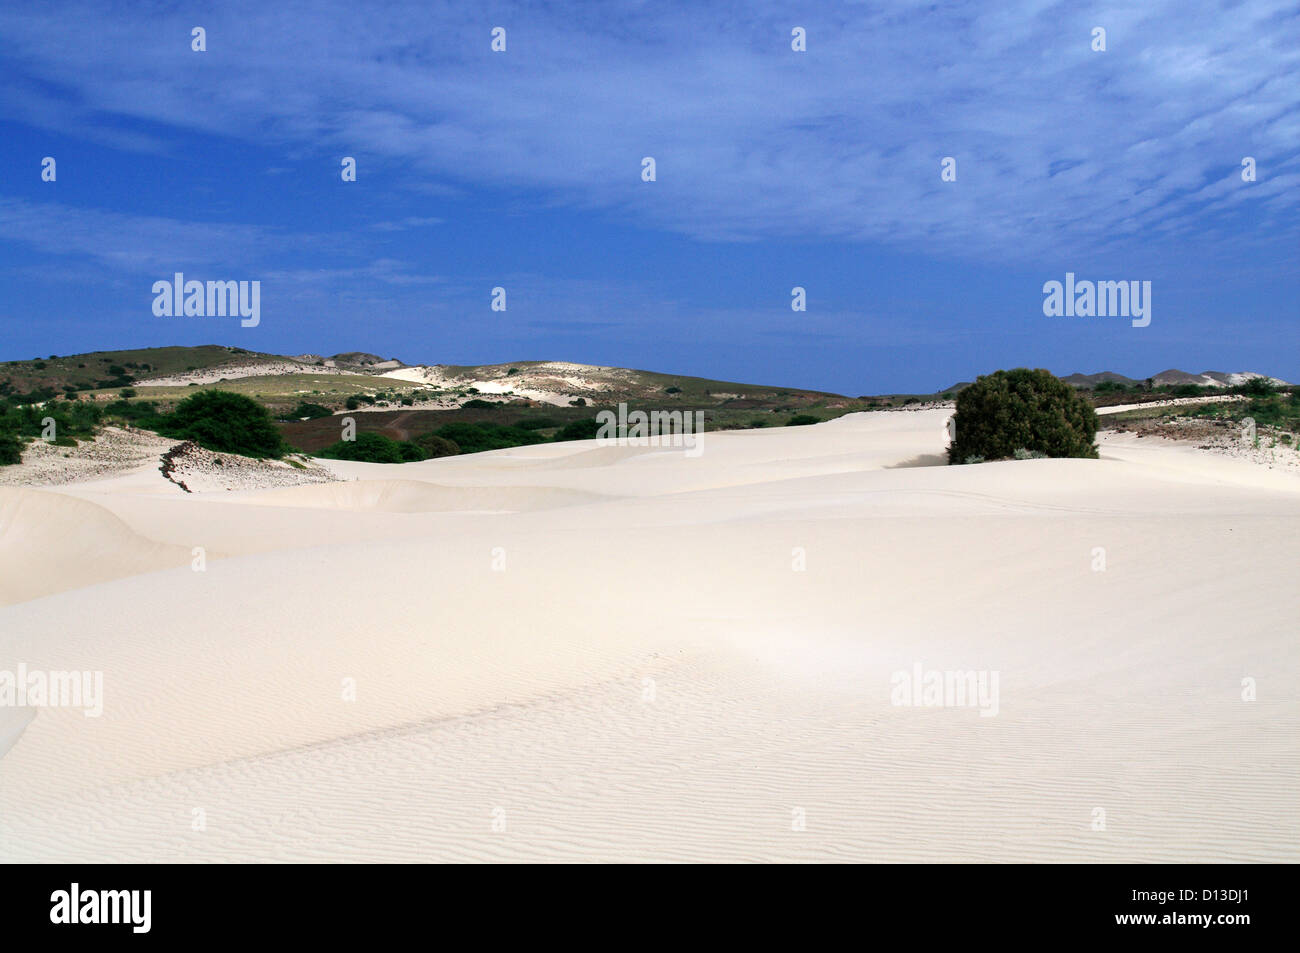 Deserto de Viana - Viana Desert on the island Boa Vista, Cape Verde Stock Photo